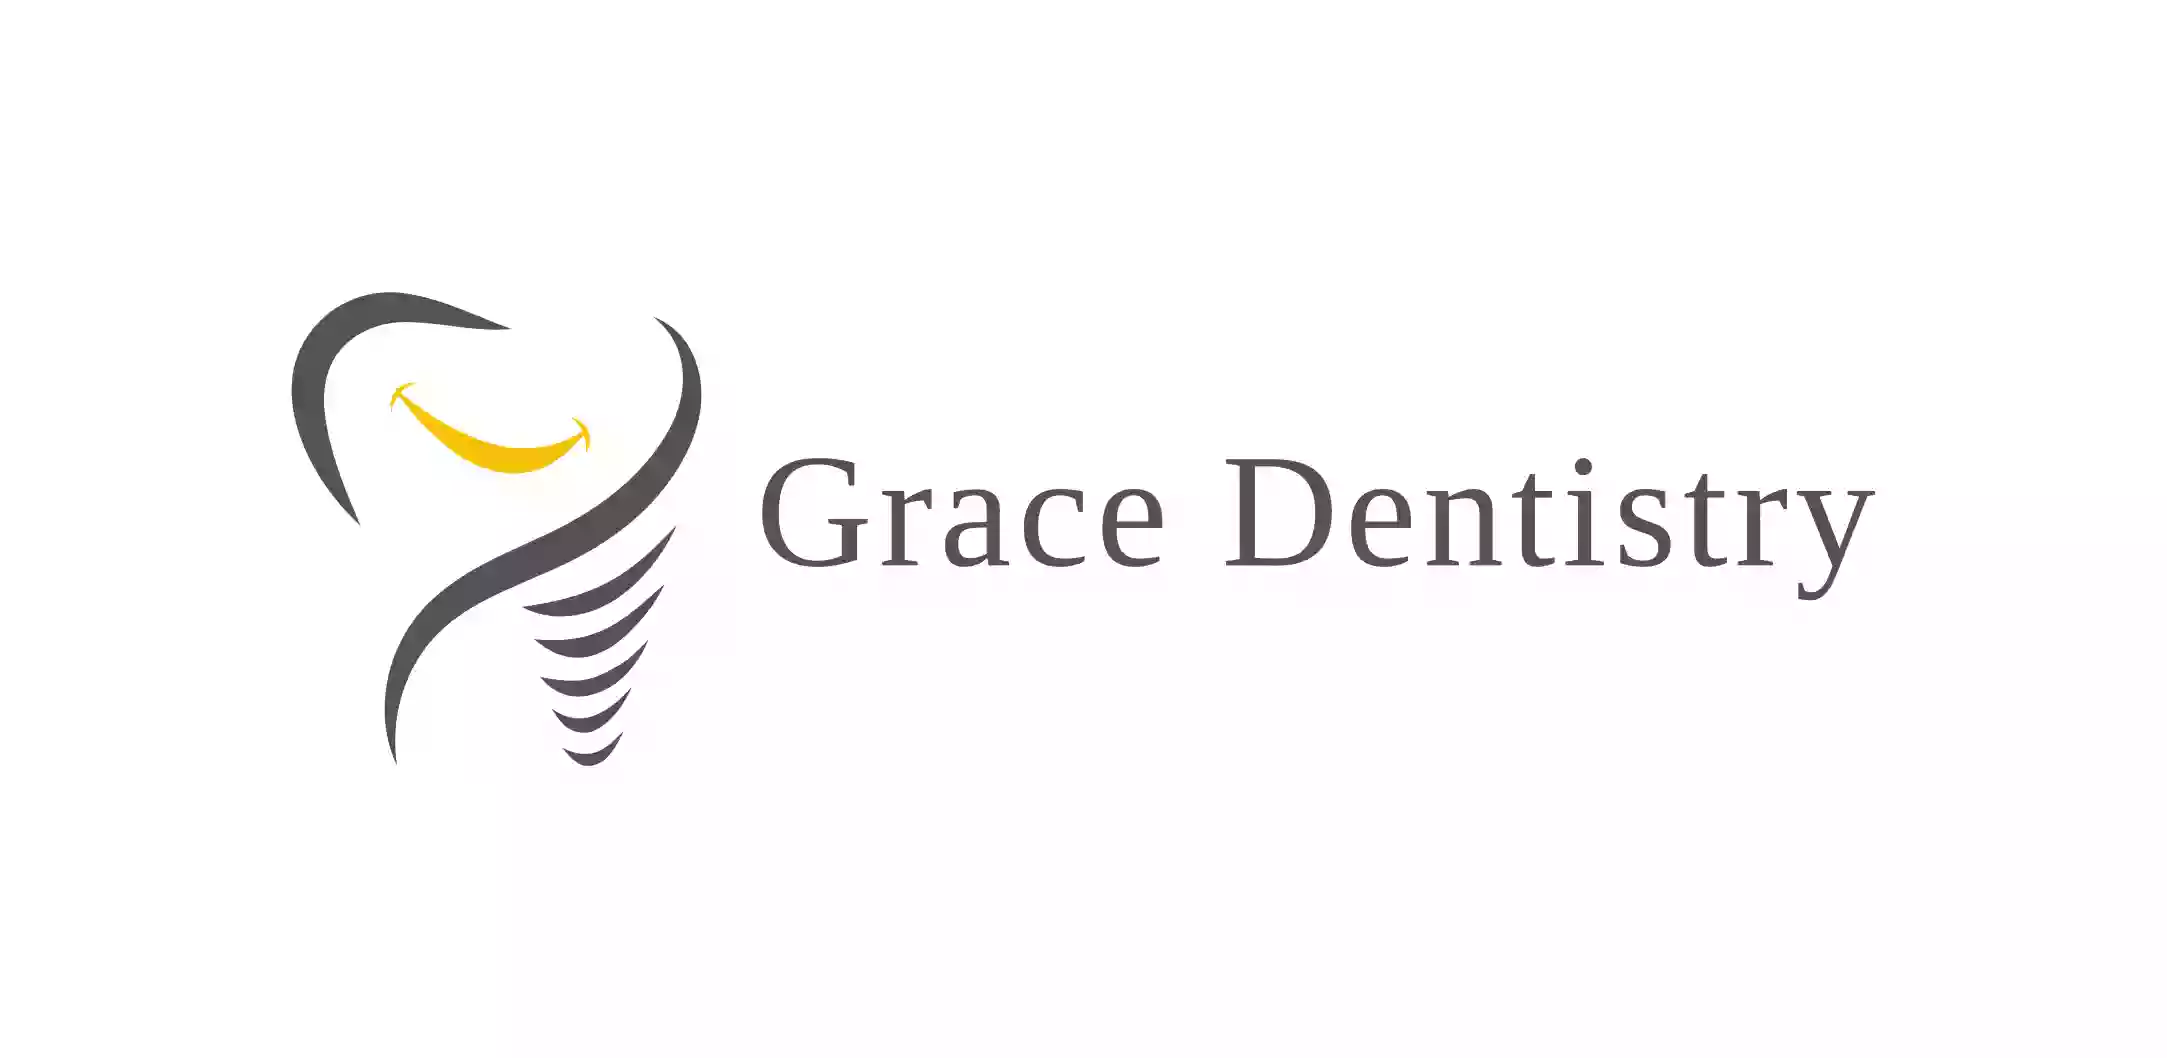 Grace Dentistry